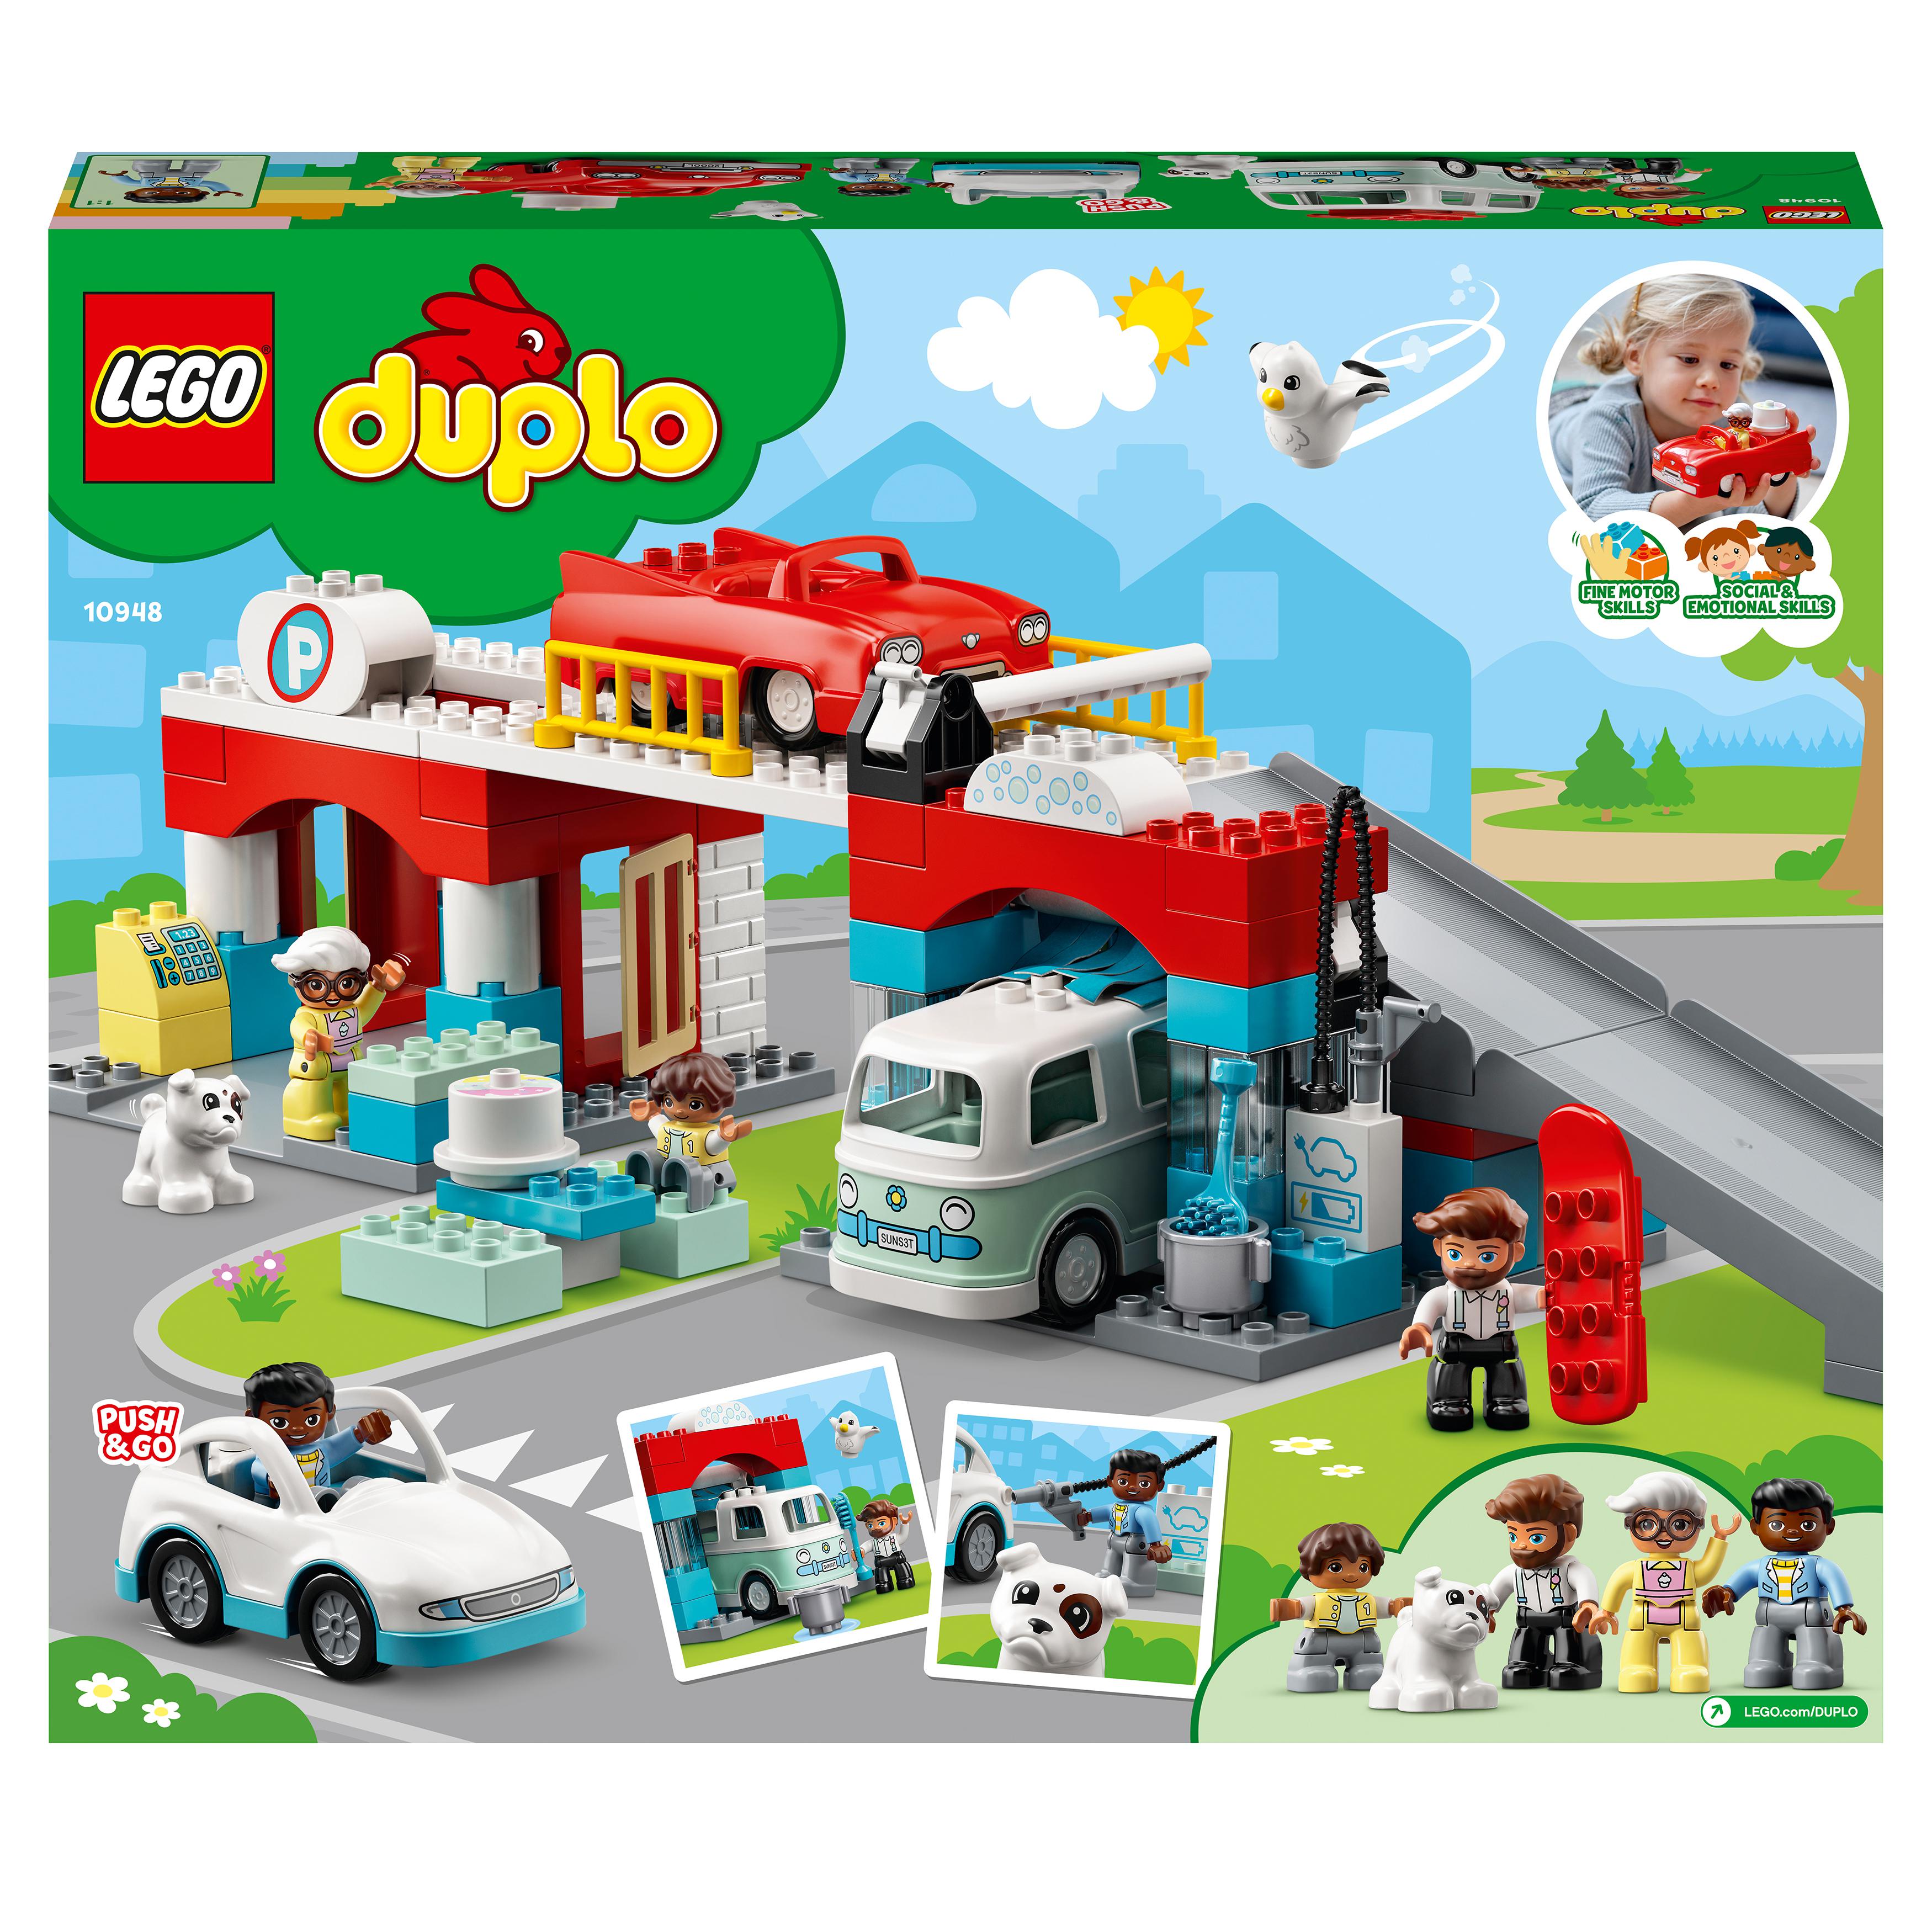 LEGO Duplo Parking Garage and Car Wash 10948